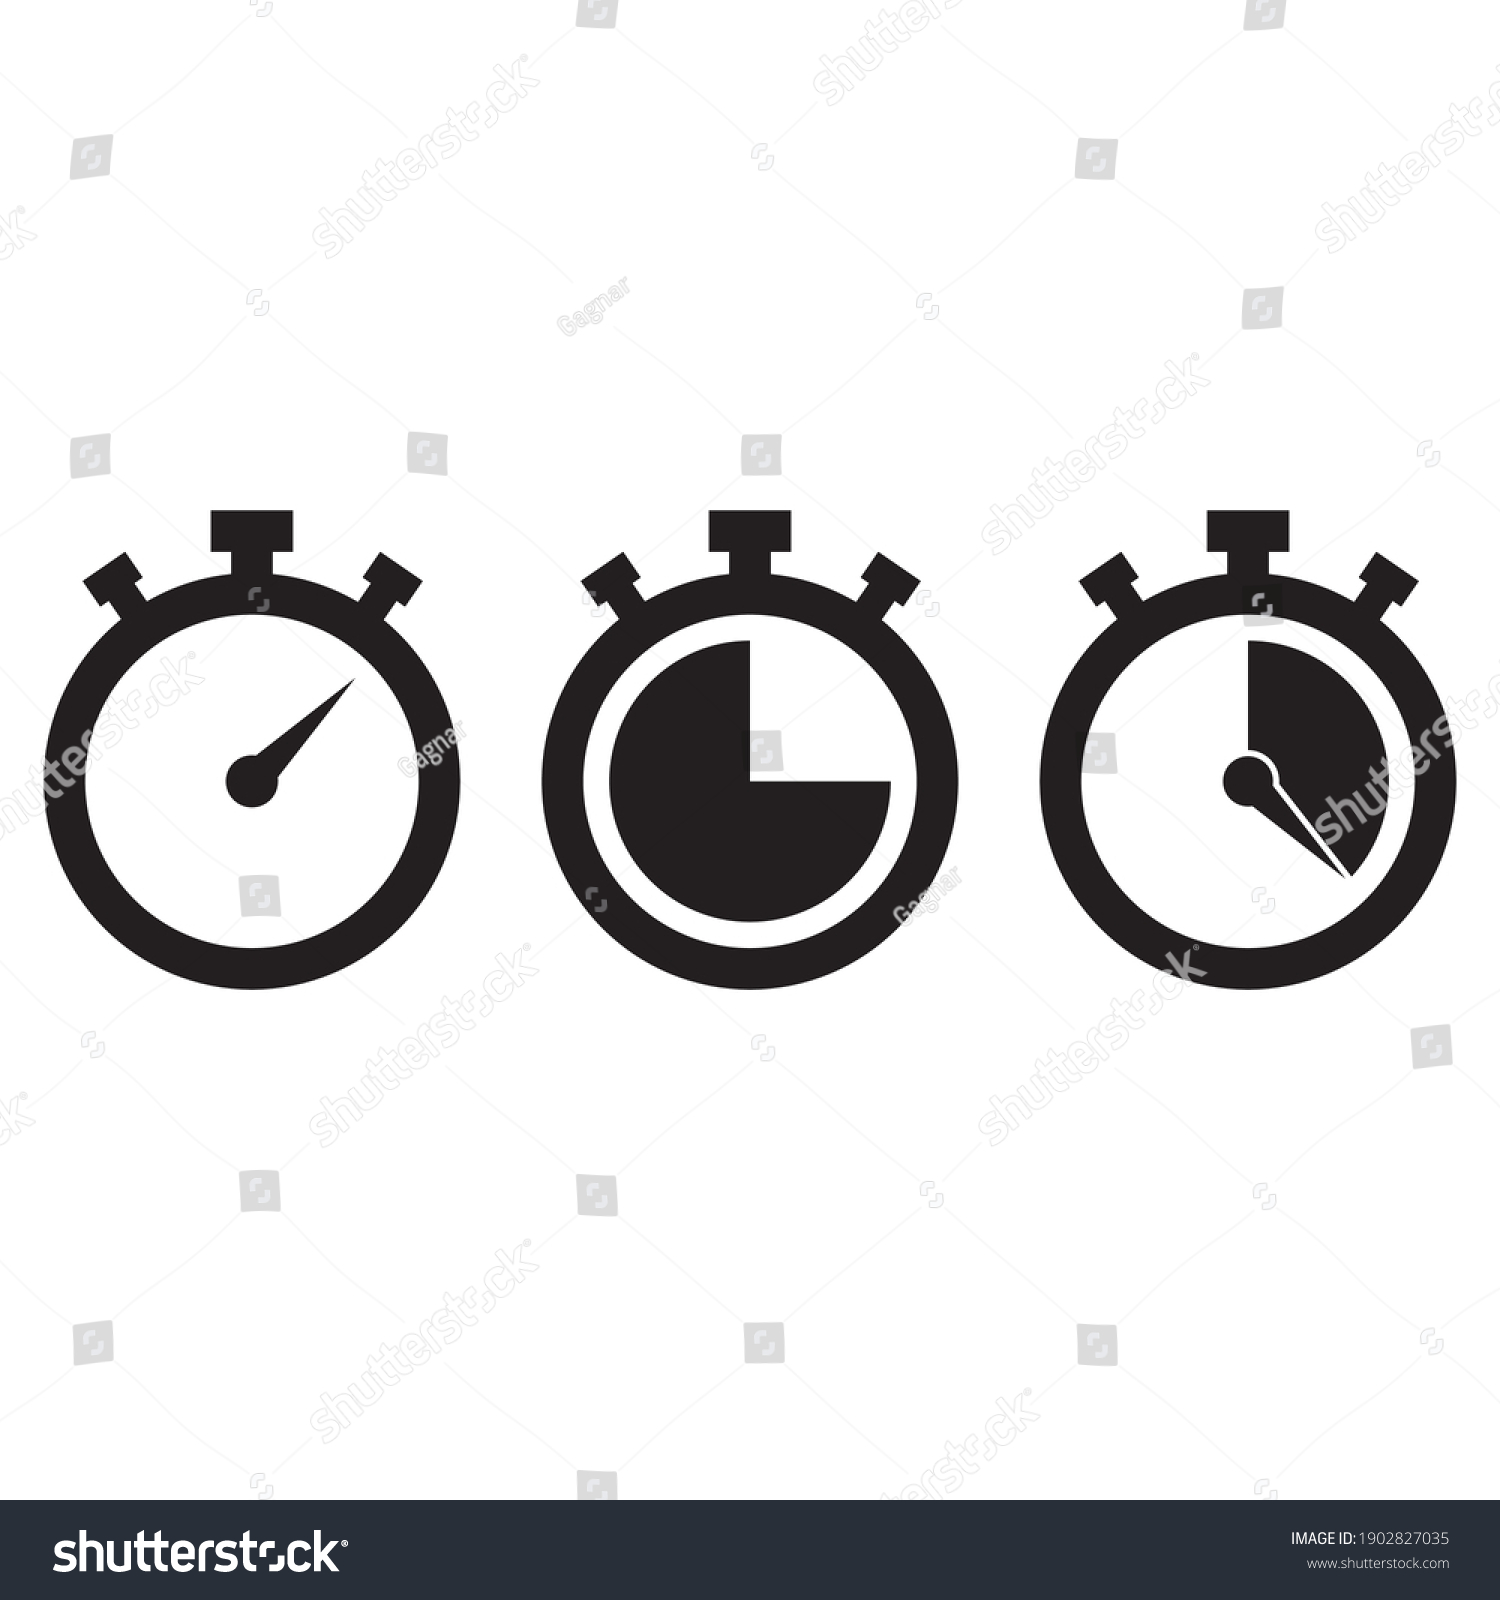 Stopwatch vector icon. Timer icon #1902827035